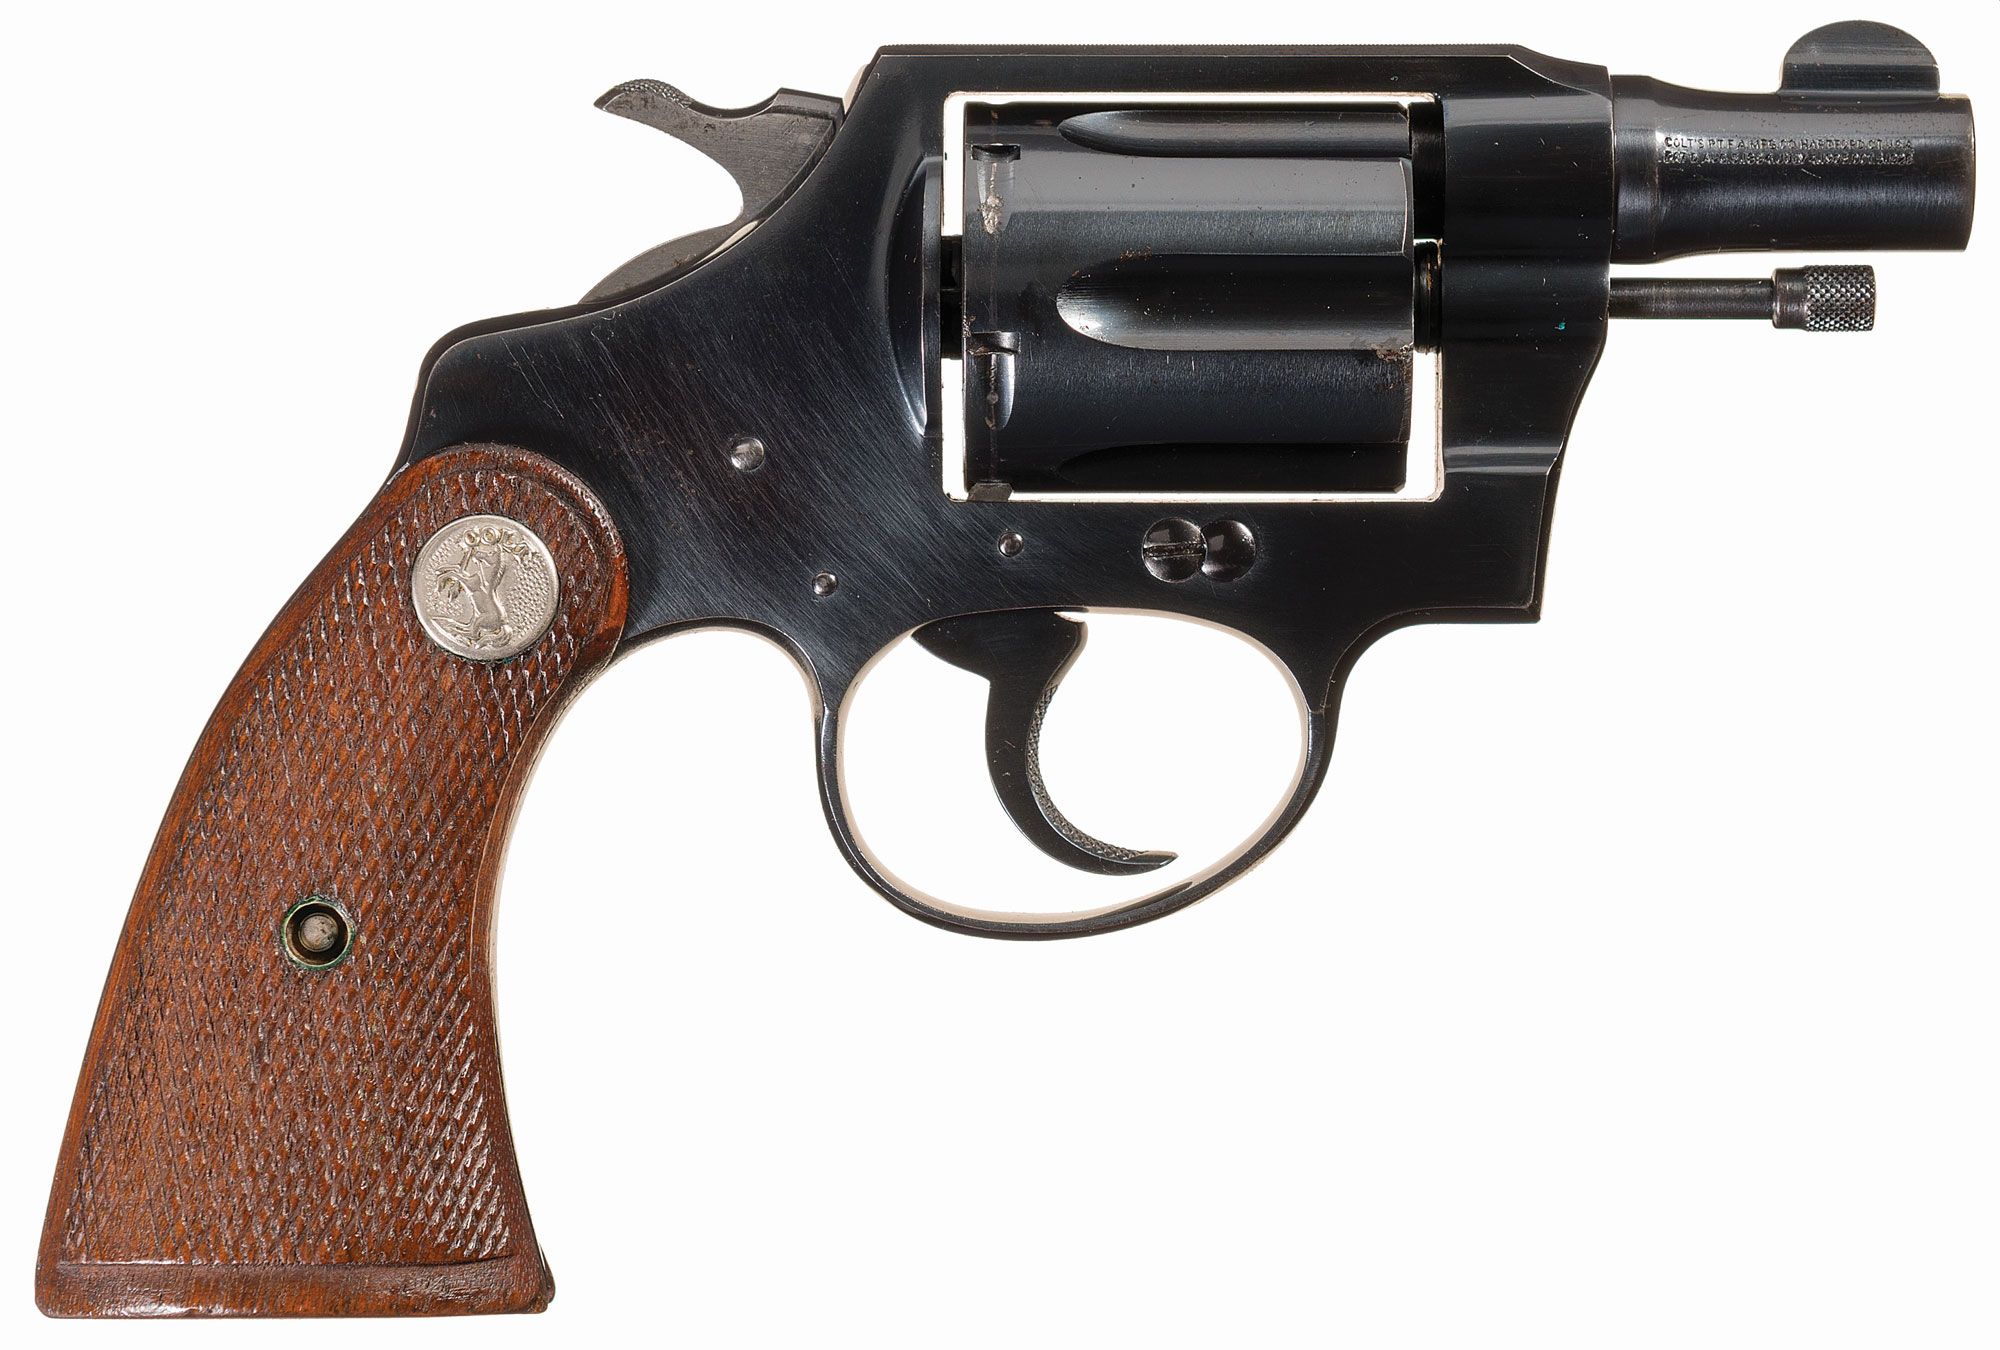 Ritchie Boys Colt revolver